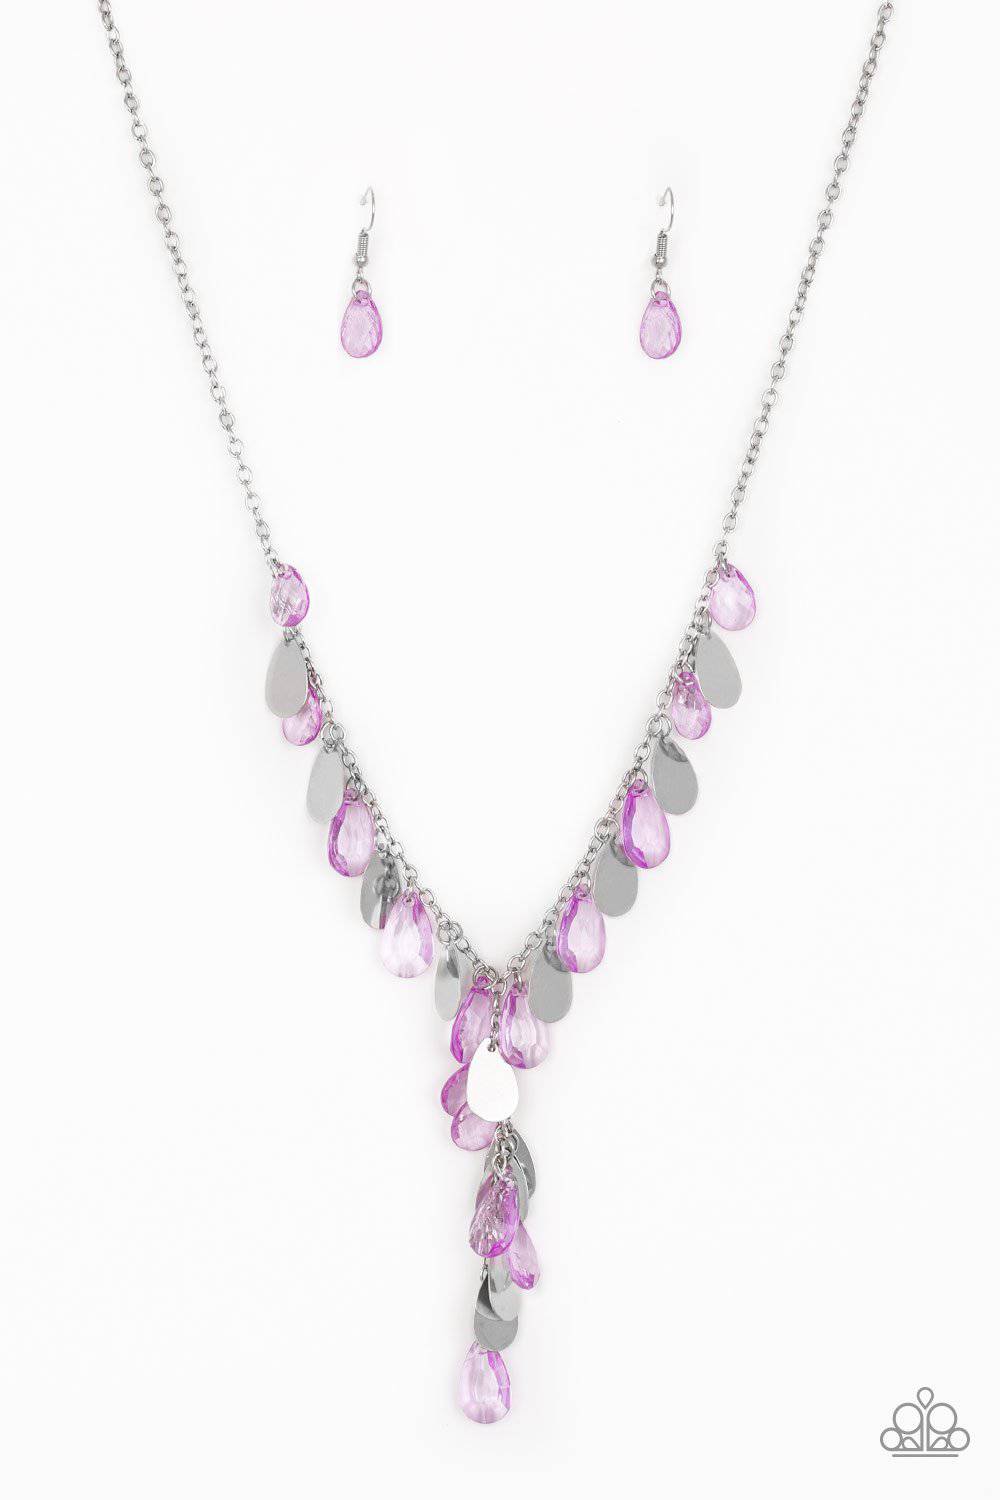 Sailboat Sunsets - Purple Teardrop Necklace - Paparazzi Accessories - GlaMarous Titi Jewels